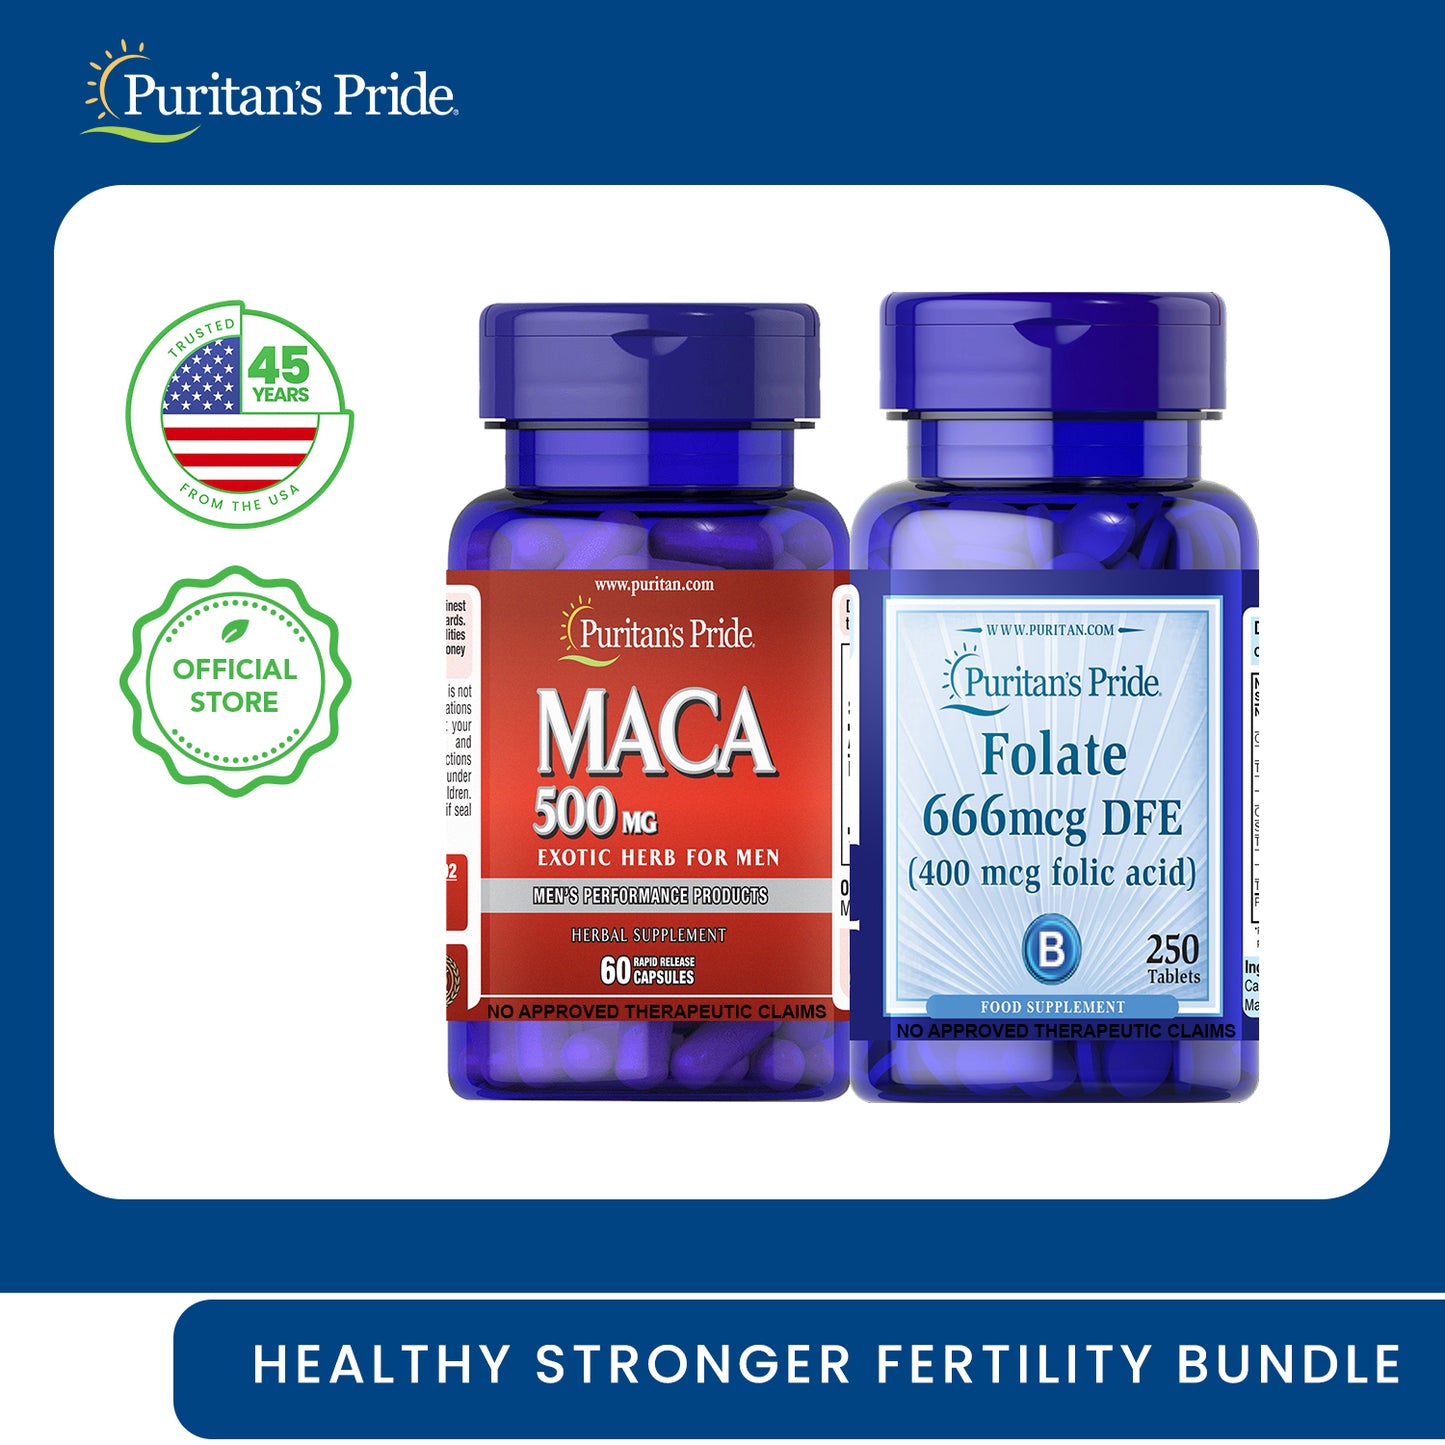 Healthy Stronger Fertility Bundle (Maca 500mg 60 capsules + Folic Acid 400mcg 250 tablets Puritans Pride)